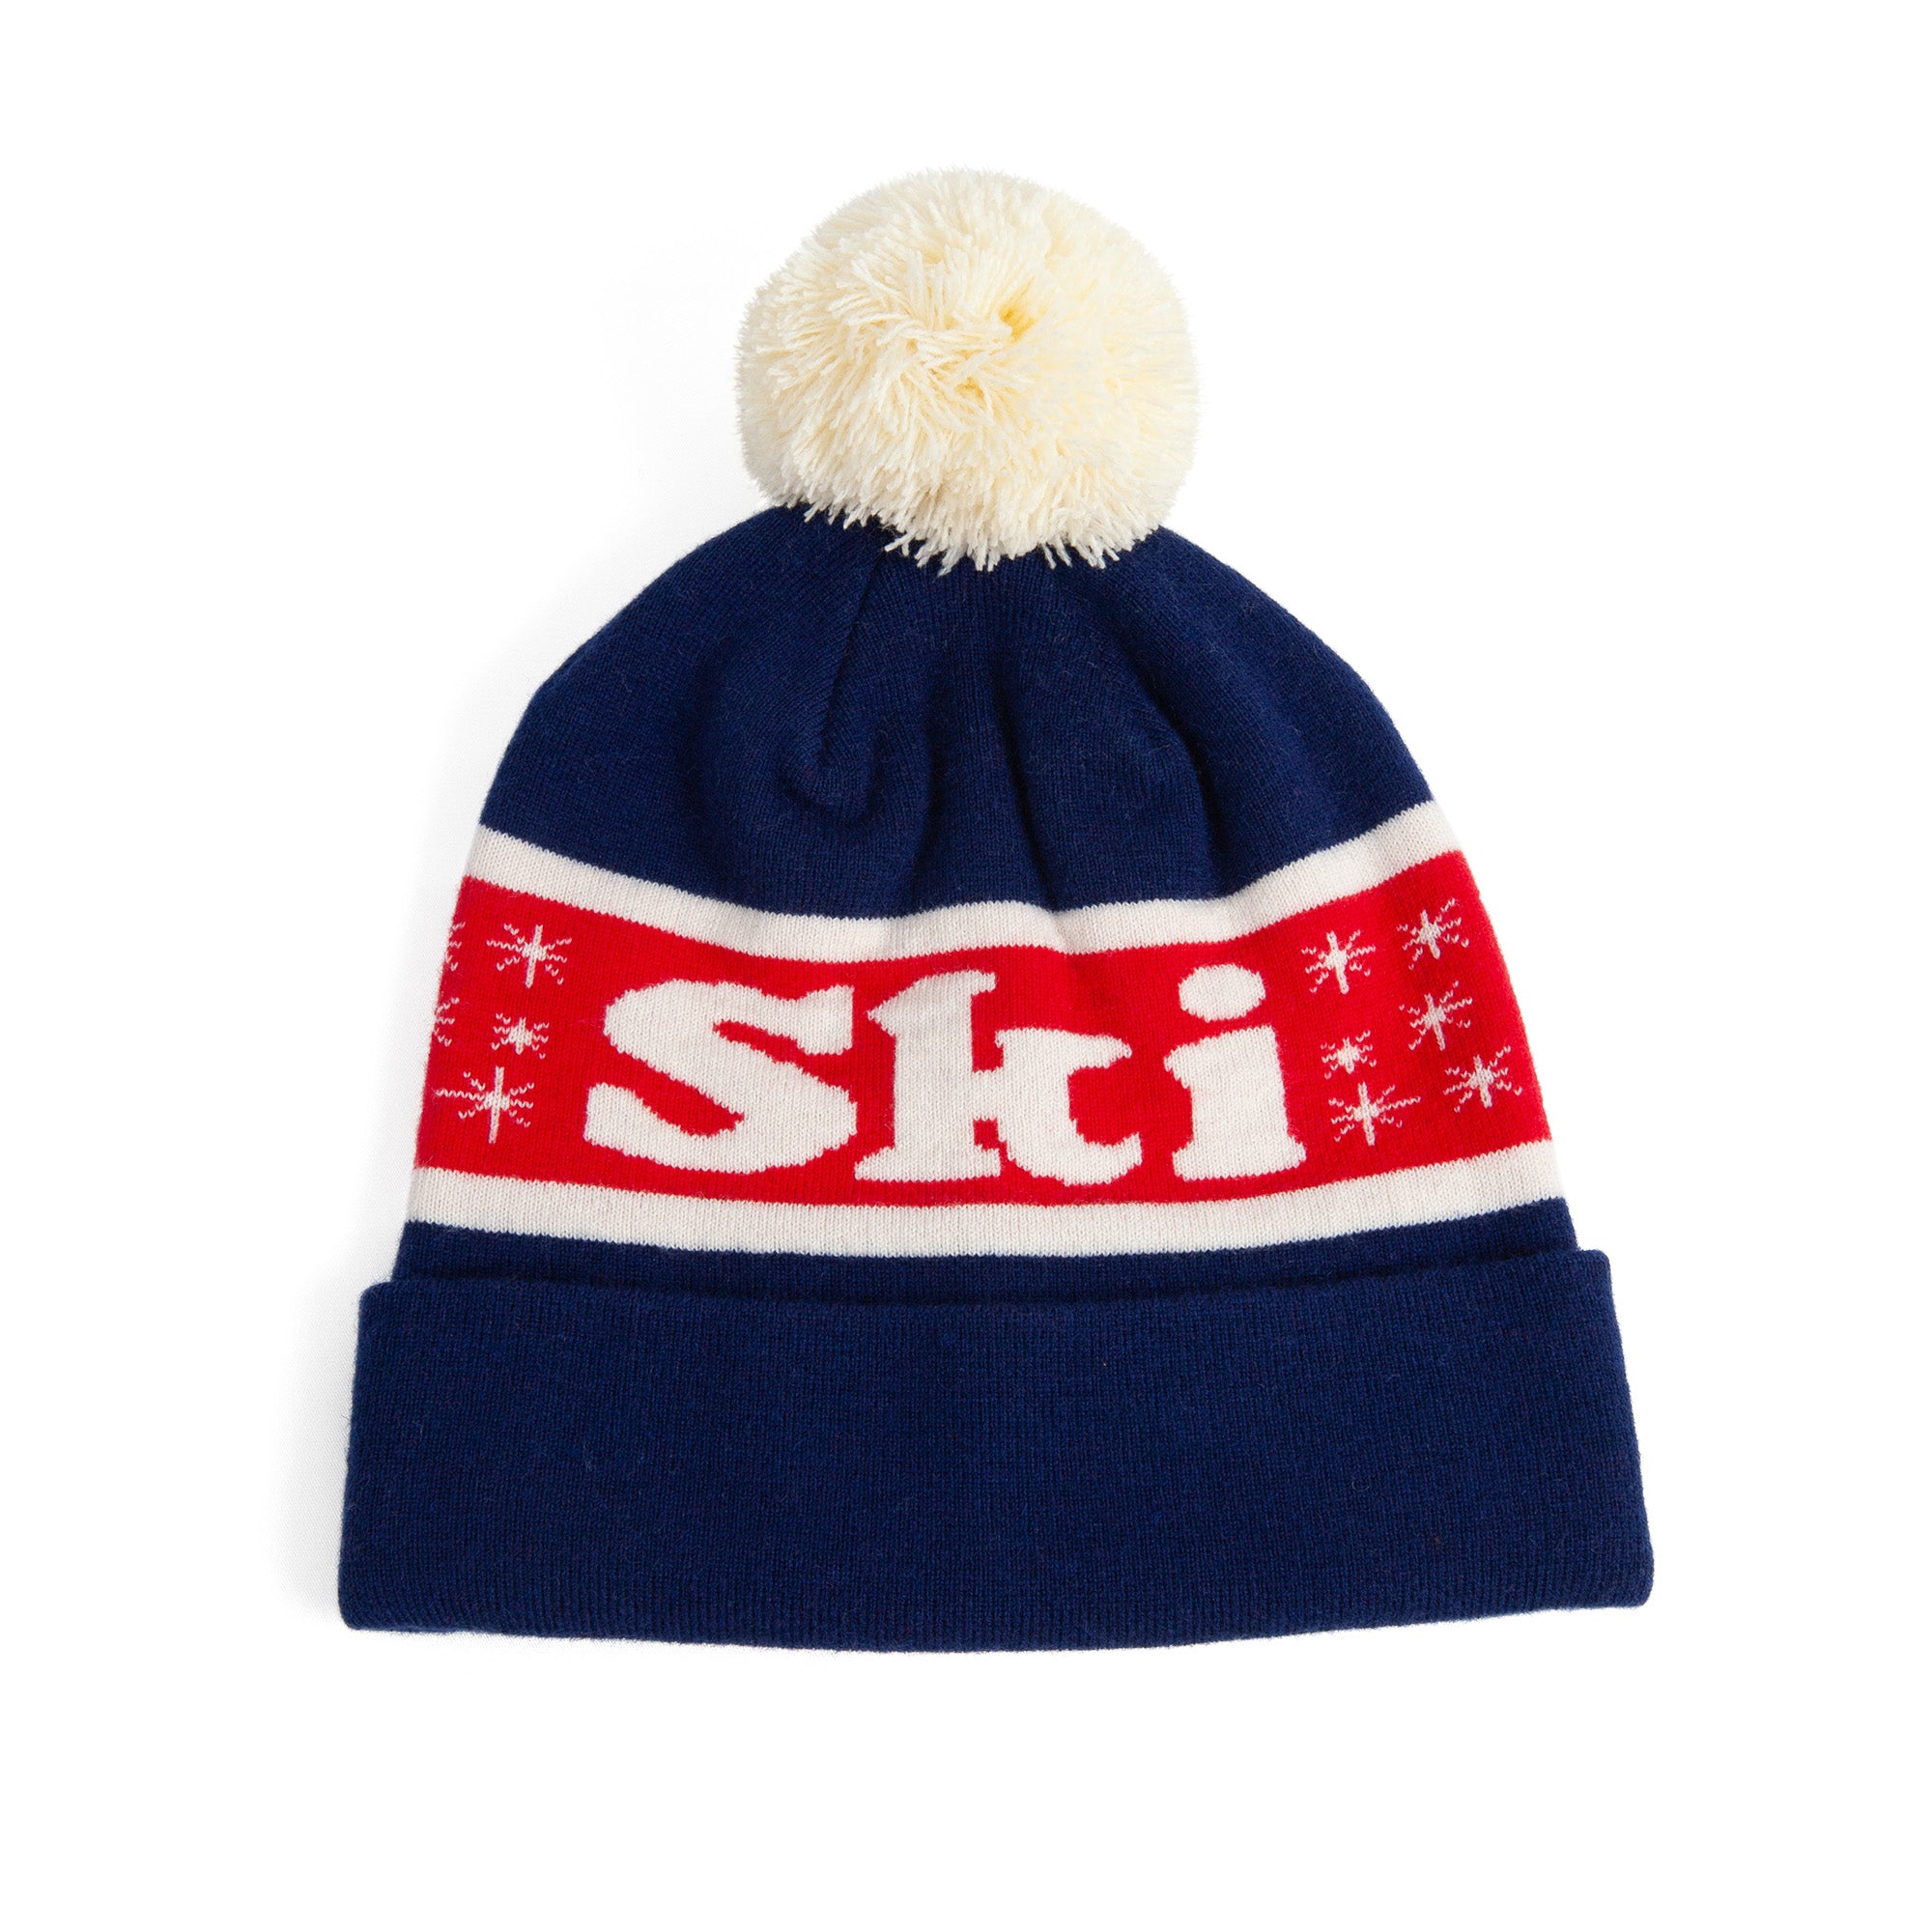 Women’s Hats, Women’s Beanie Hats, Winter Hats,  Comfortable, Ski Lady, Winter, Cold Weather